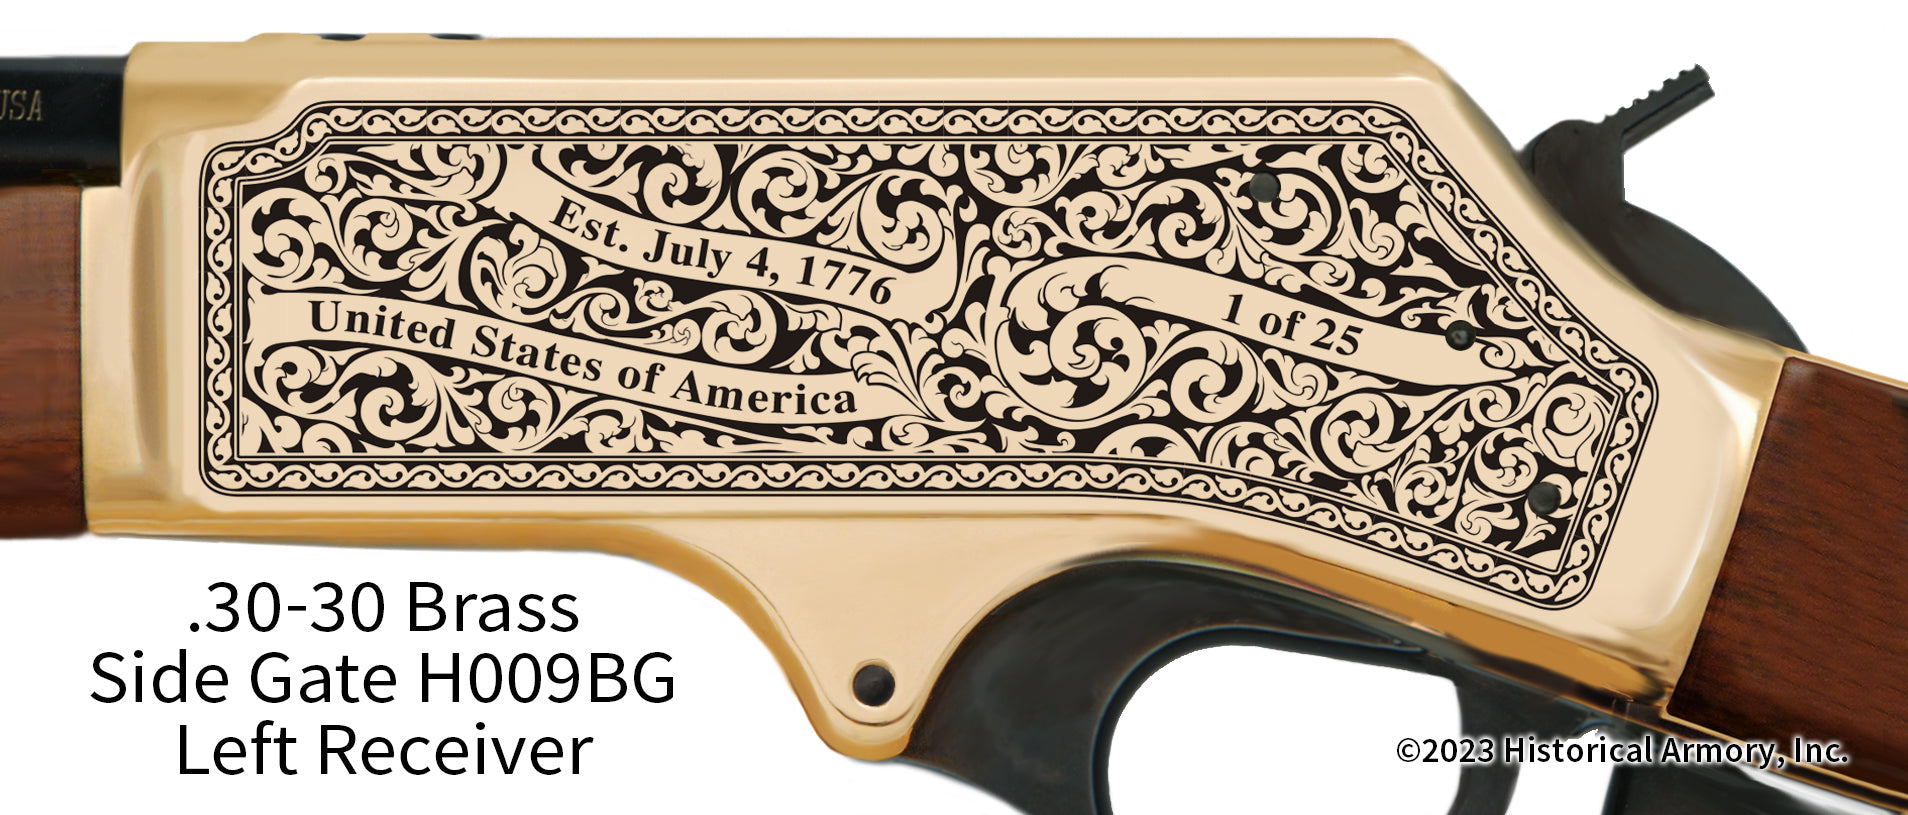 Clark County Kentucky Engraved Henry .30-30 Brass Side Gate Rifle